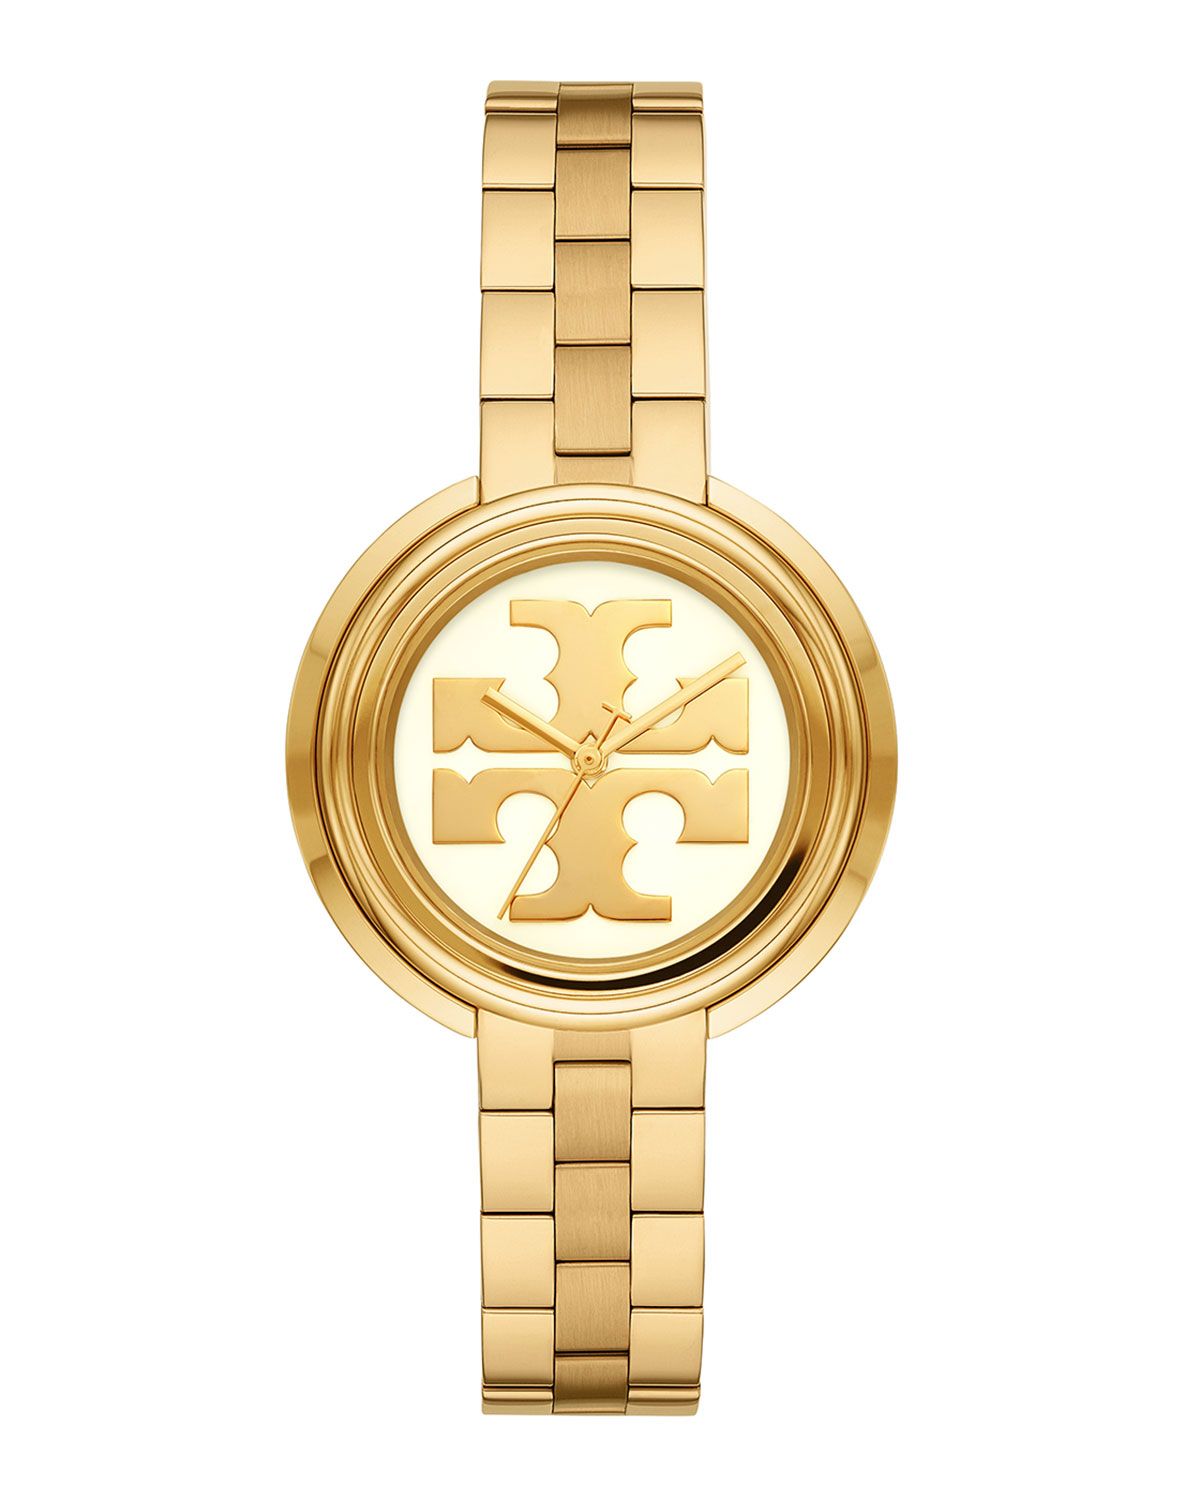 Miller Watch with Bracelet Strap, Gold | Neiman Marcus